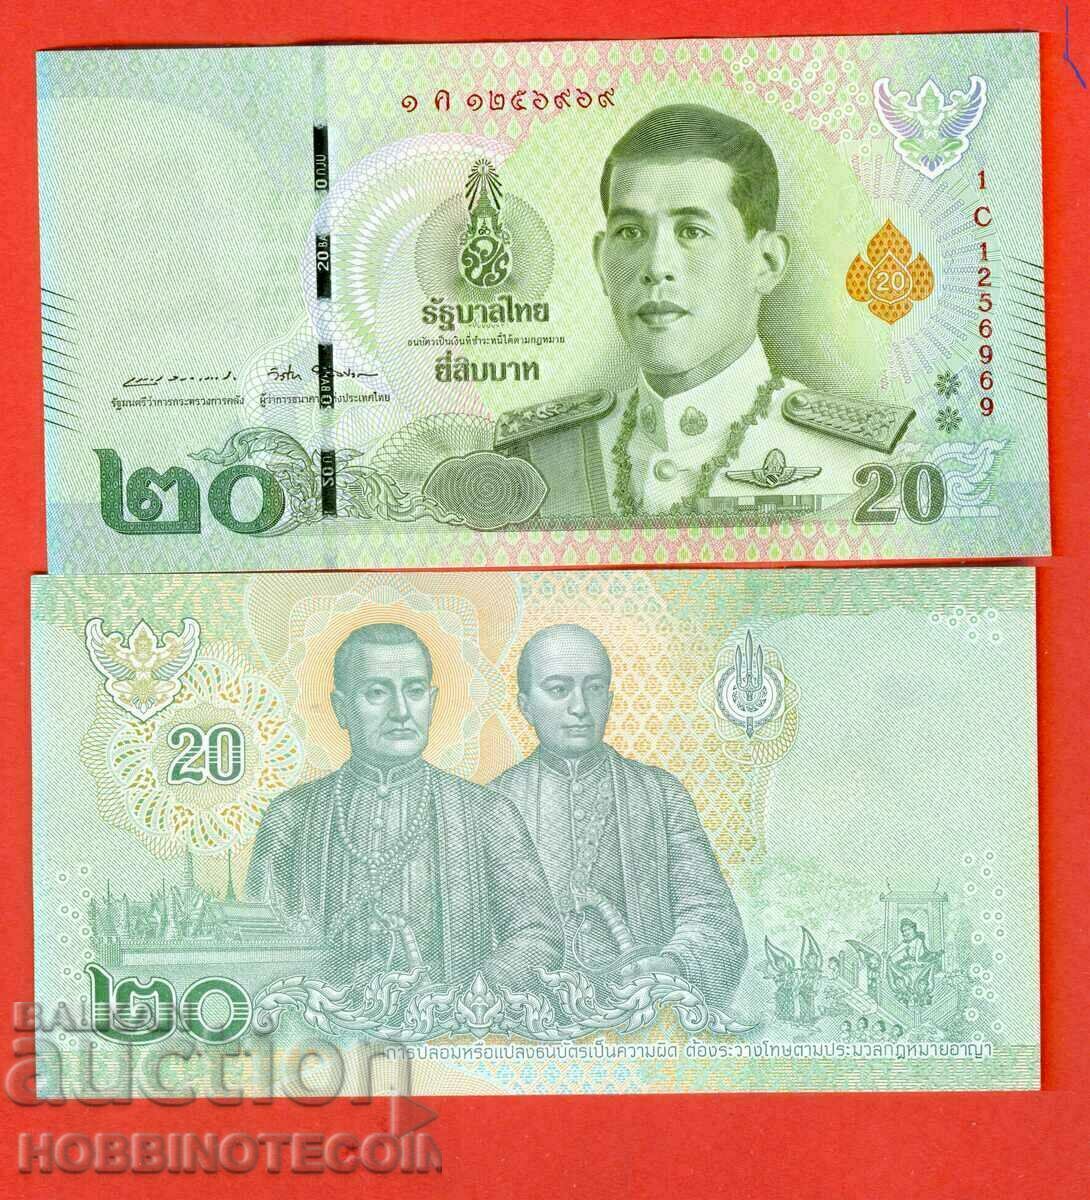 THAILAND THAILAND 20 BATA NEW KING 2 text issue 2018 NEW UNC